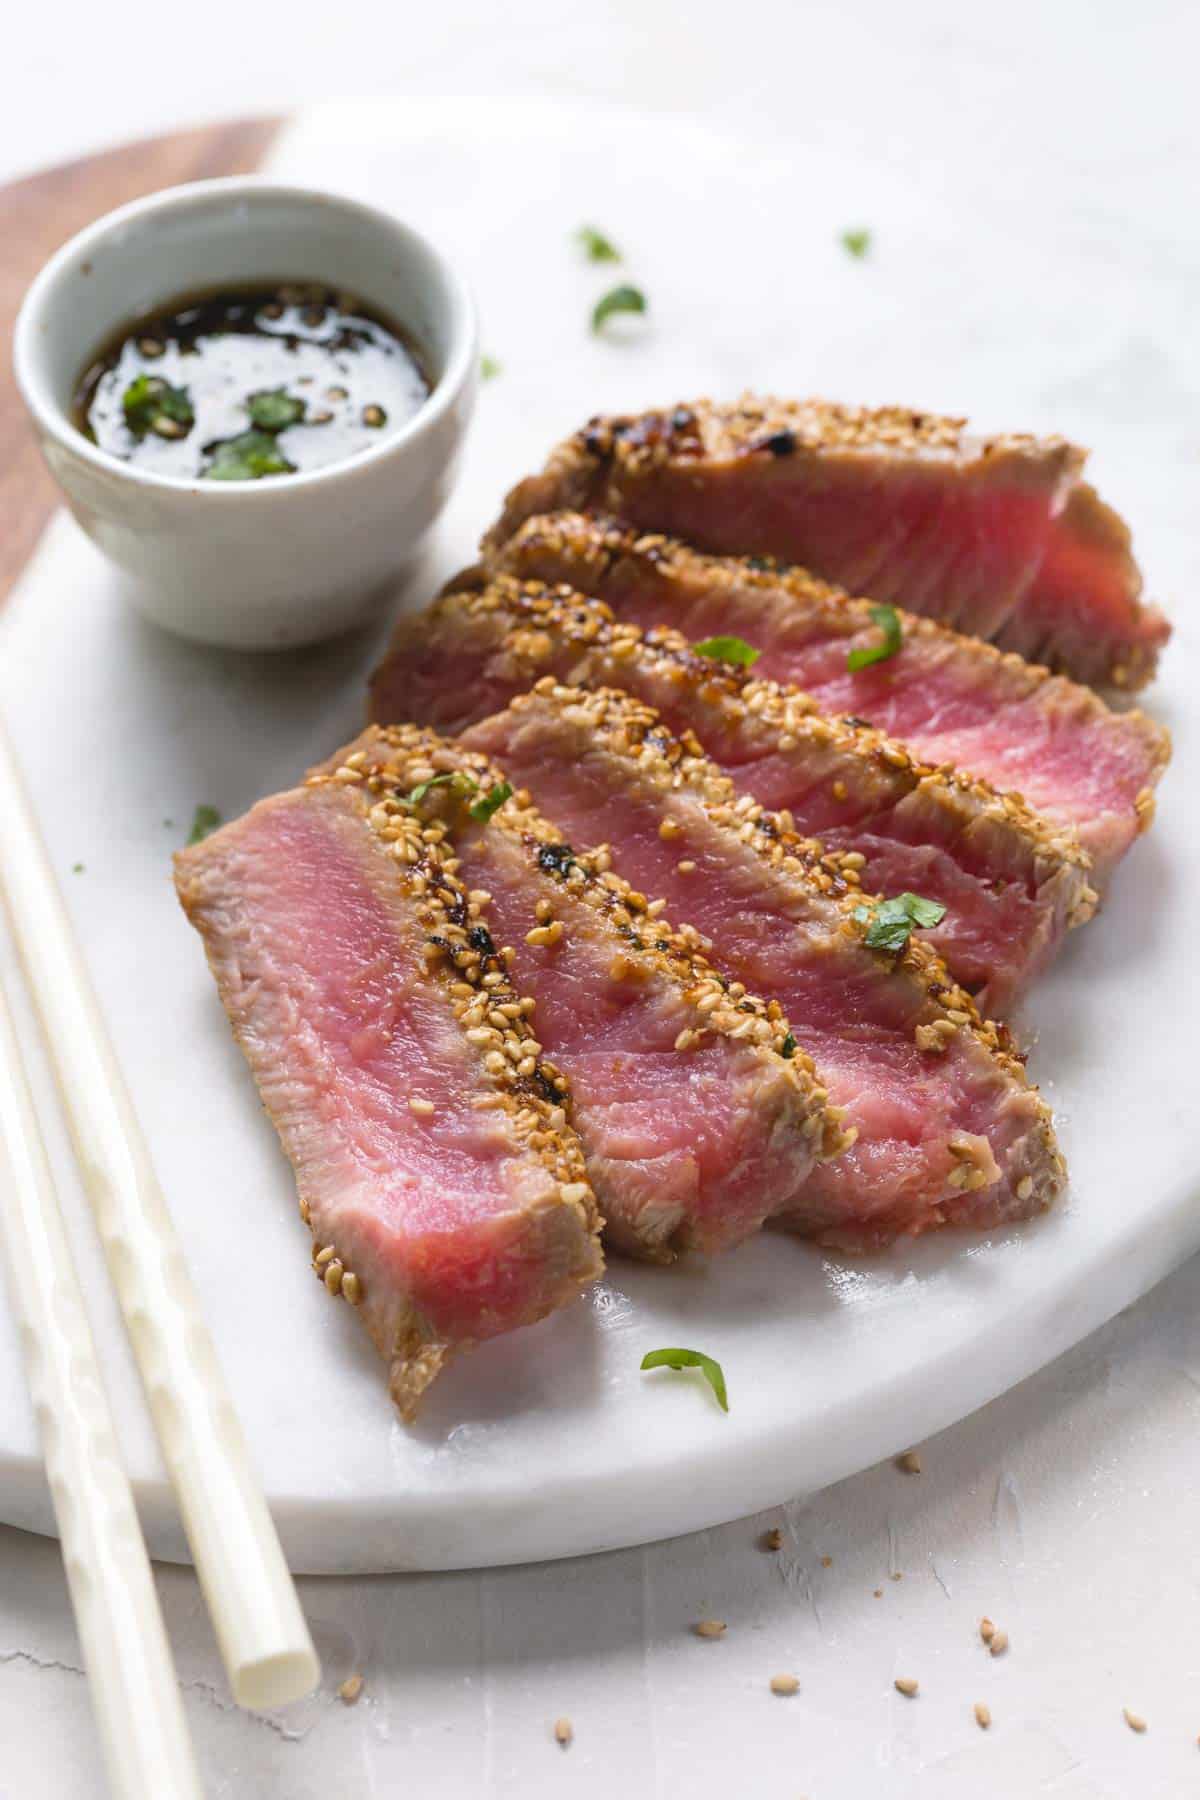 Seared and sliced ahi tuna with sesame crust on a platter.